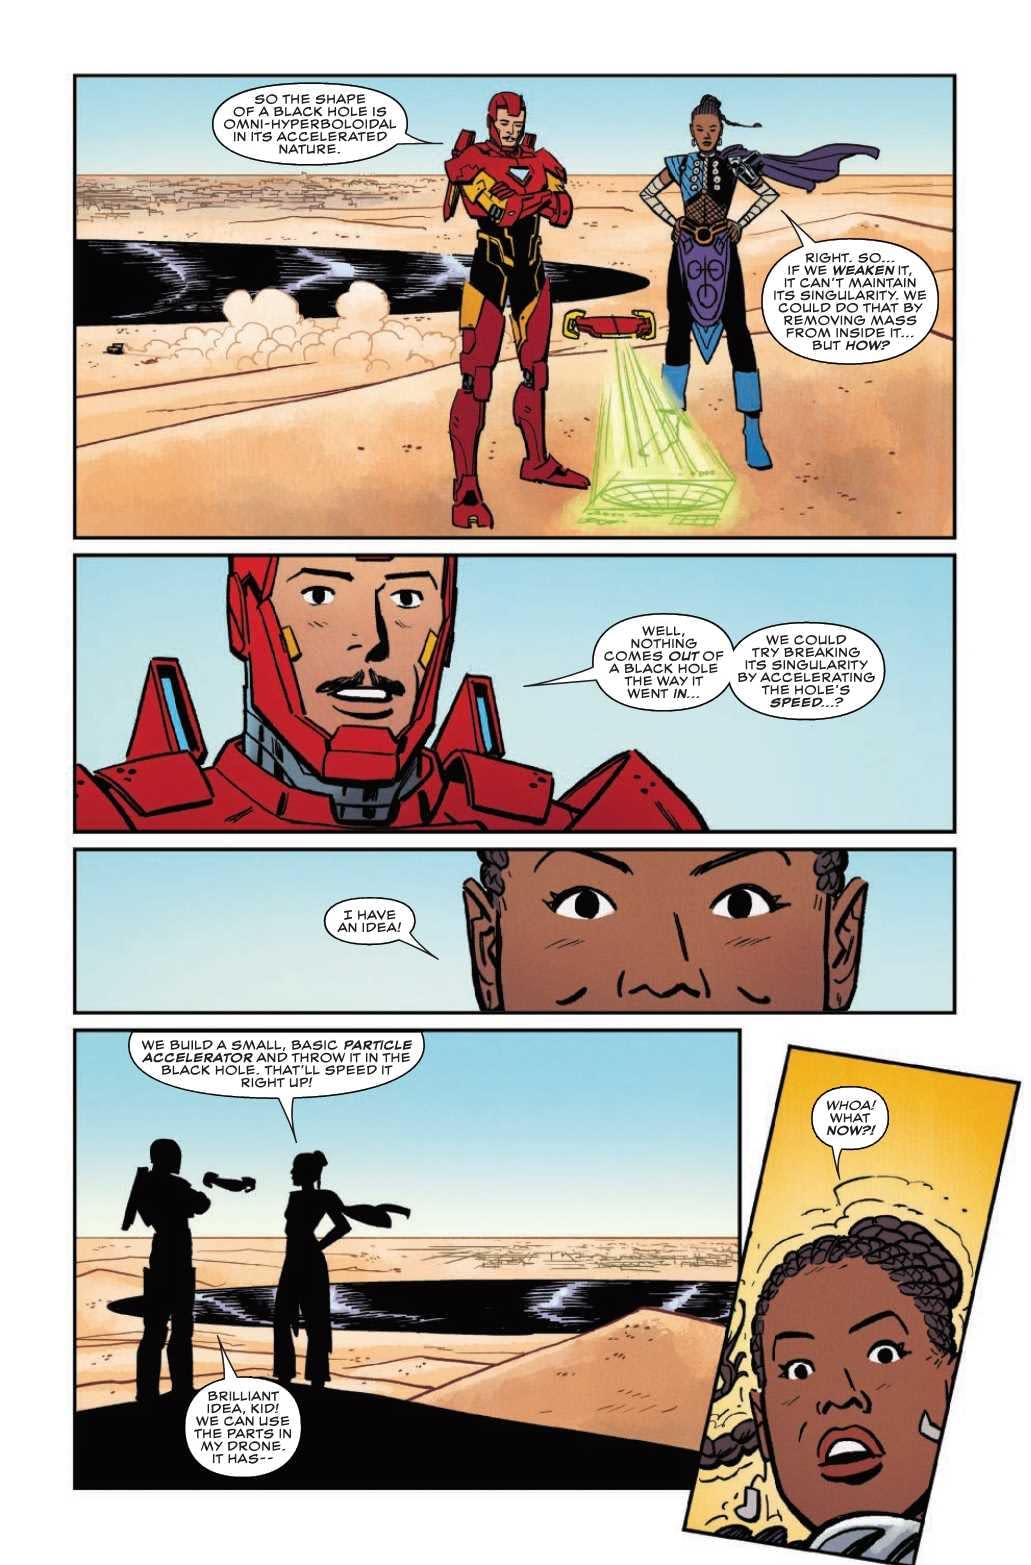 Terrible Ideas Follow Iron Man Everywhere in Next Week's Shuri #5 (Preview)